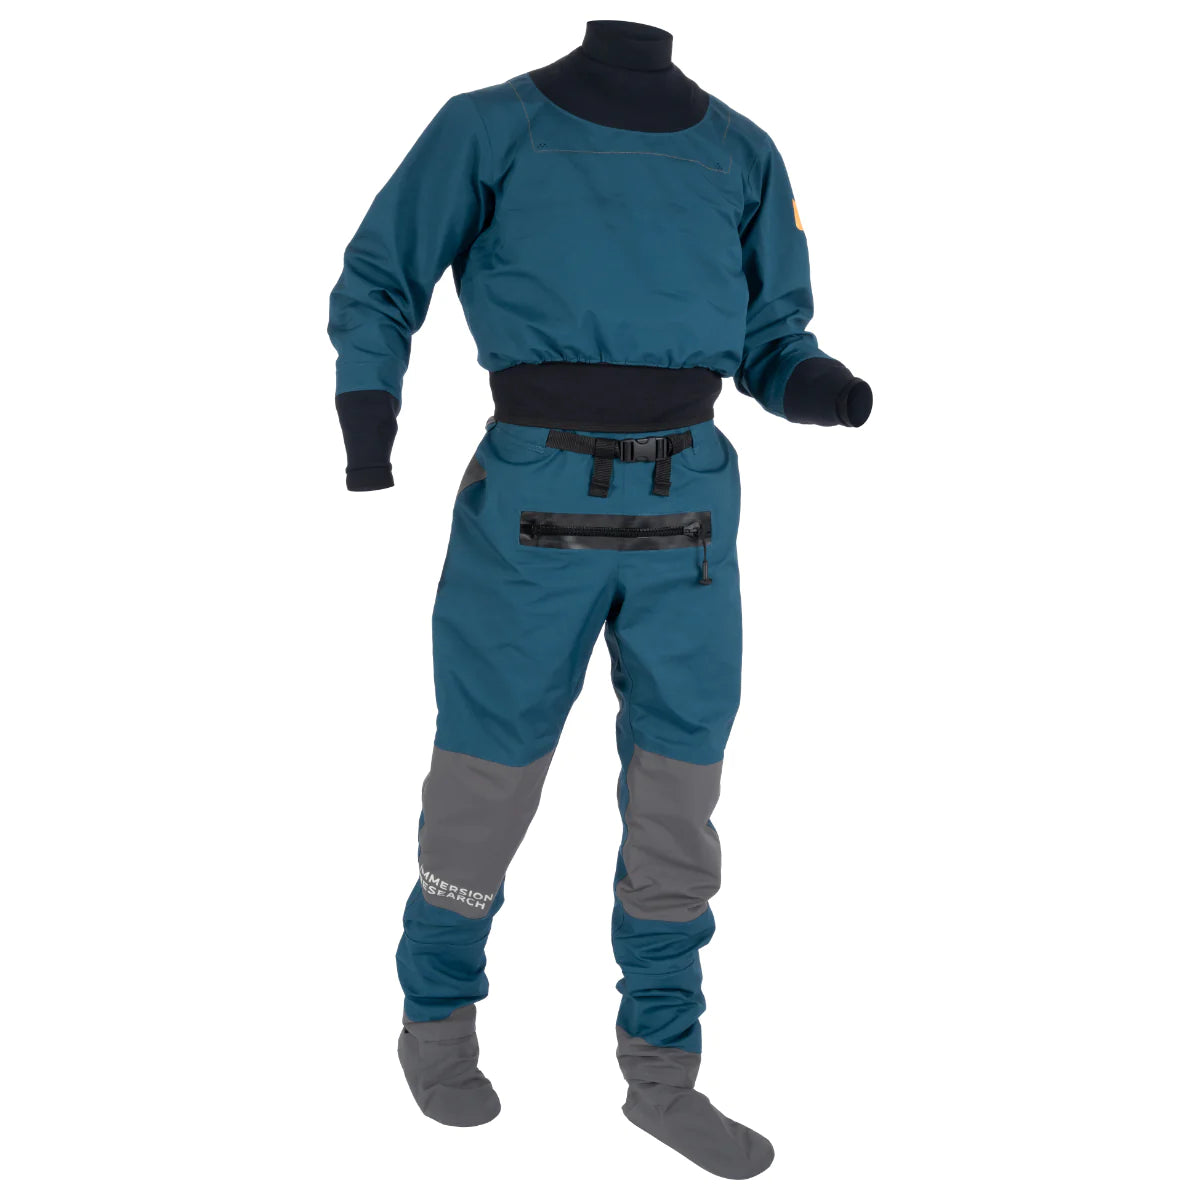 Immersion Research Men's 7Figure Dry Suit